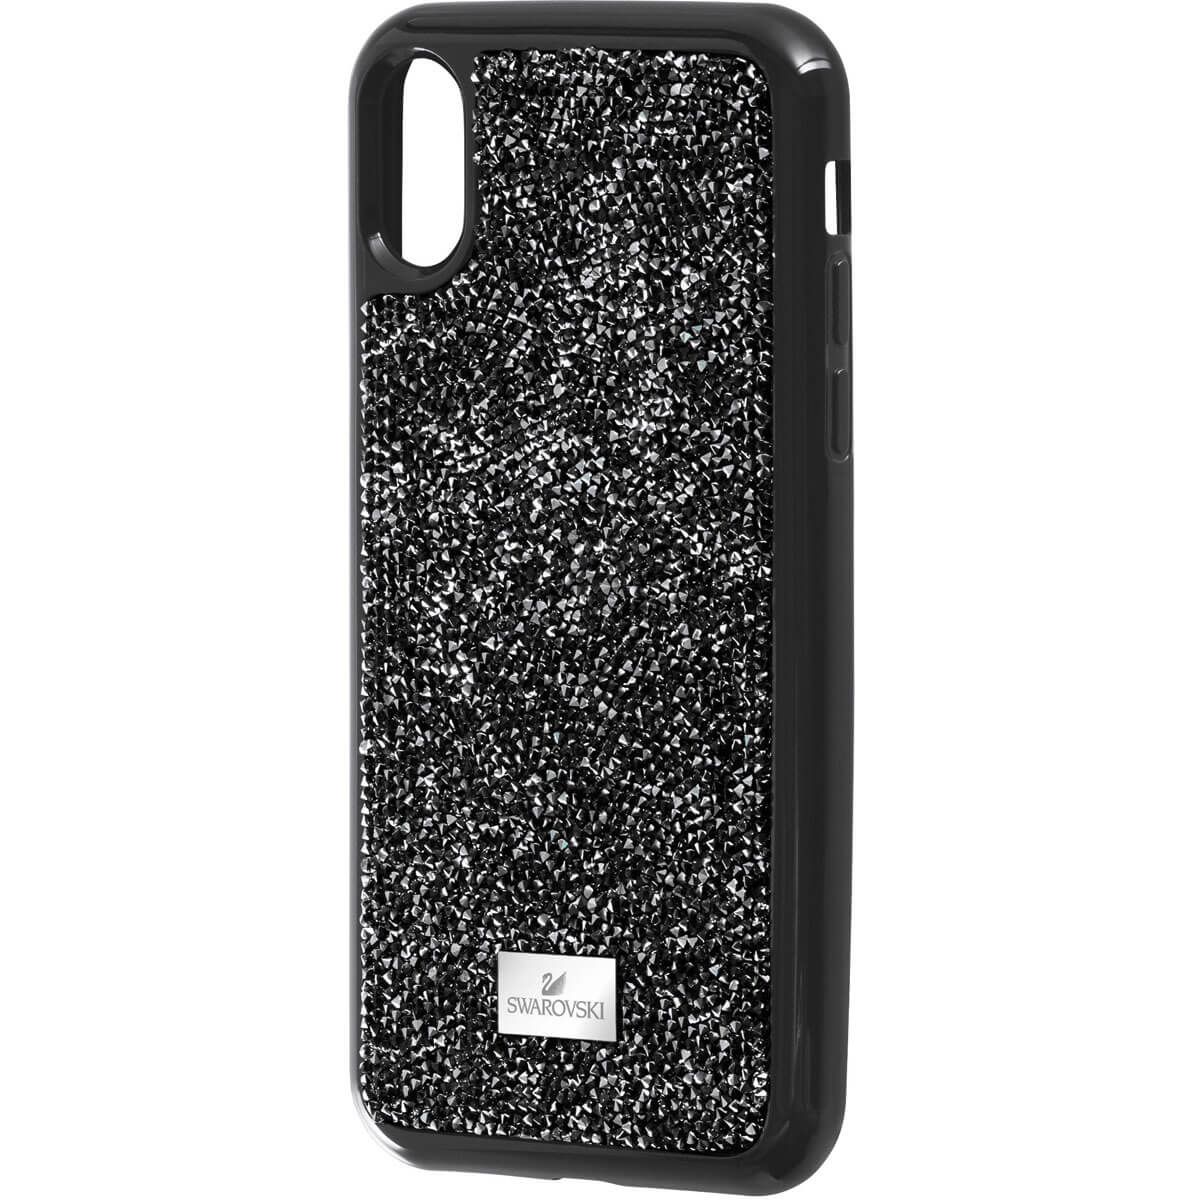 Buy Swarovski Glam Rock Smartphone Case with Bumper, iPhone® XS Max